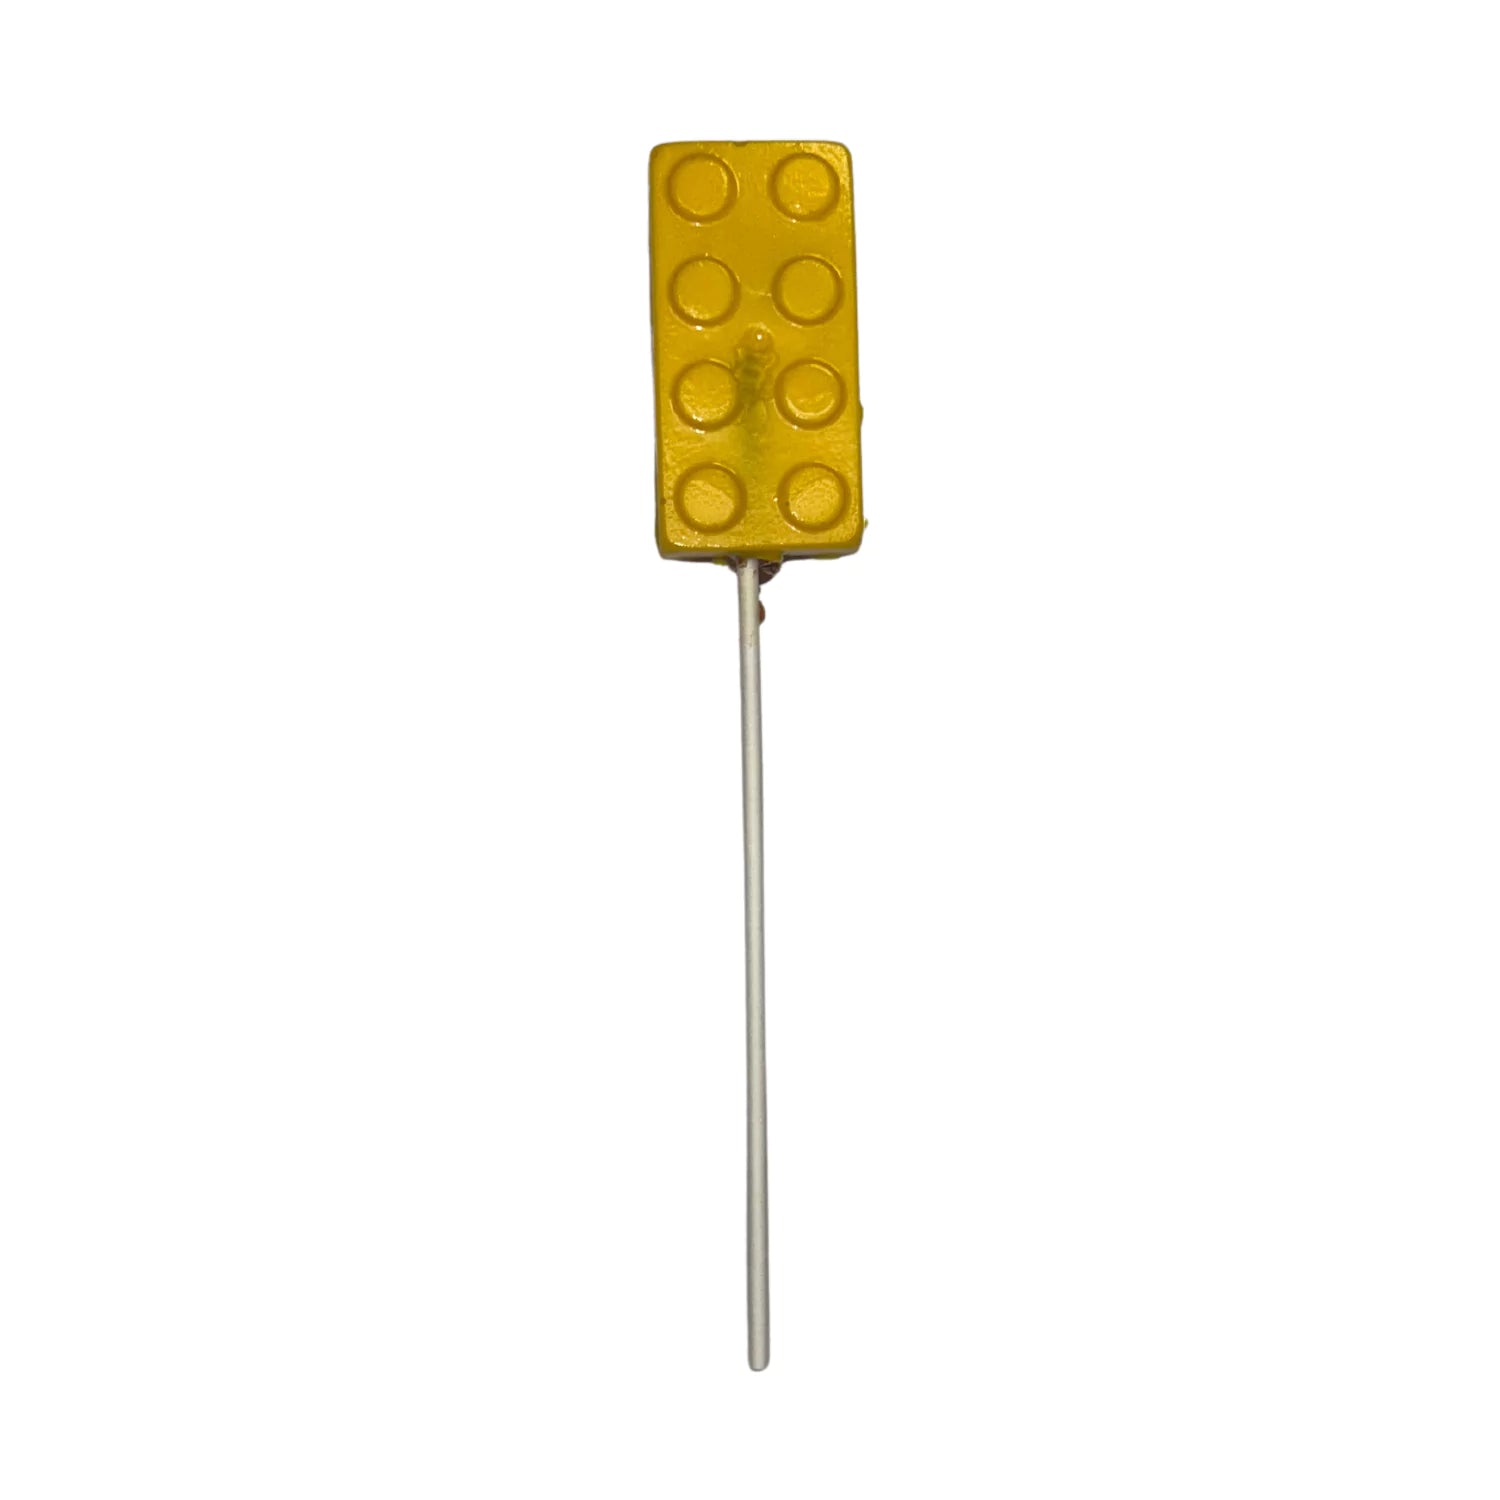 Assorted Colors Lego Brick Lollipop Sucker 0.9 oz White Chocolate Milk Chocolate Yellow